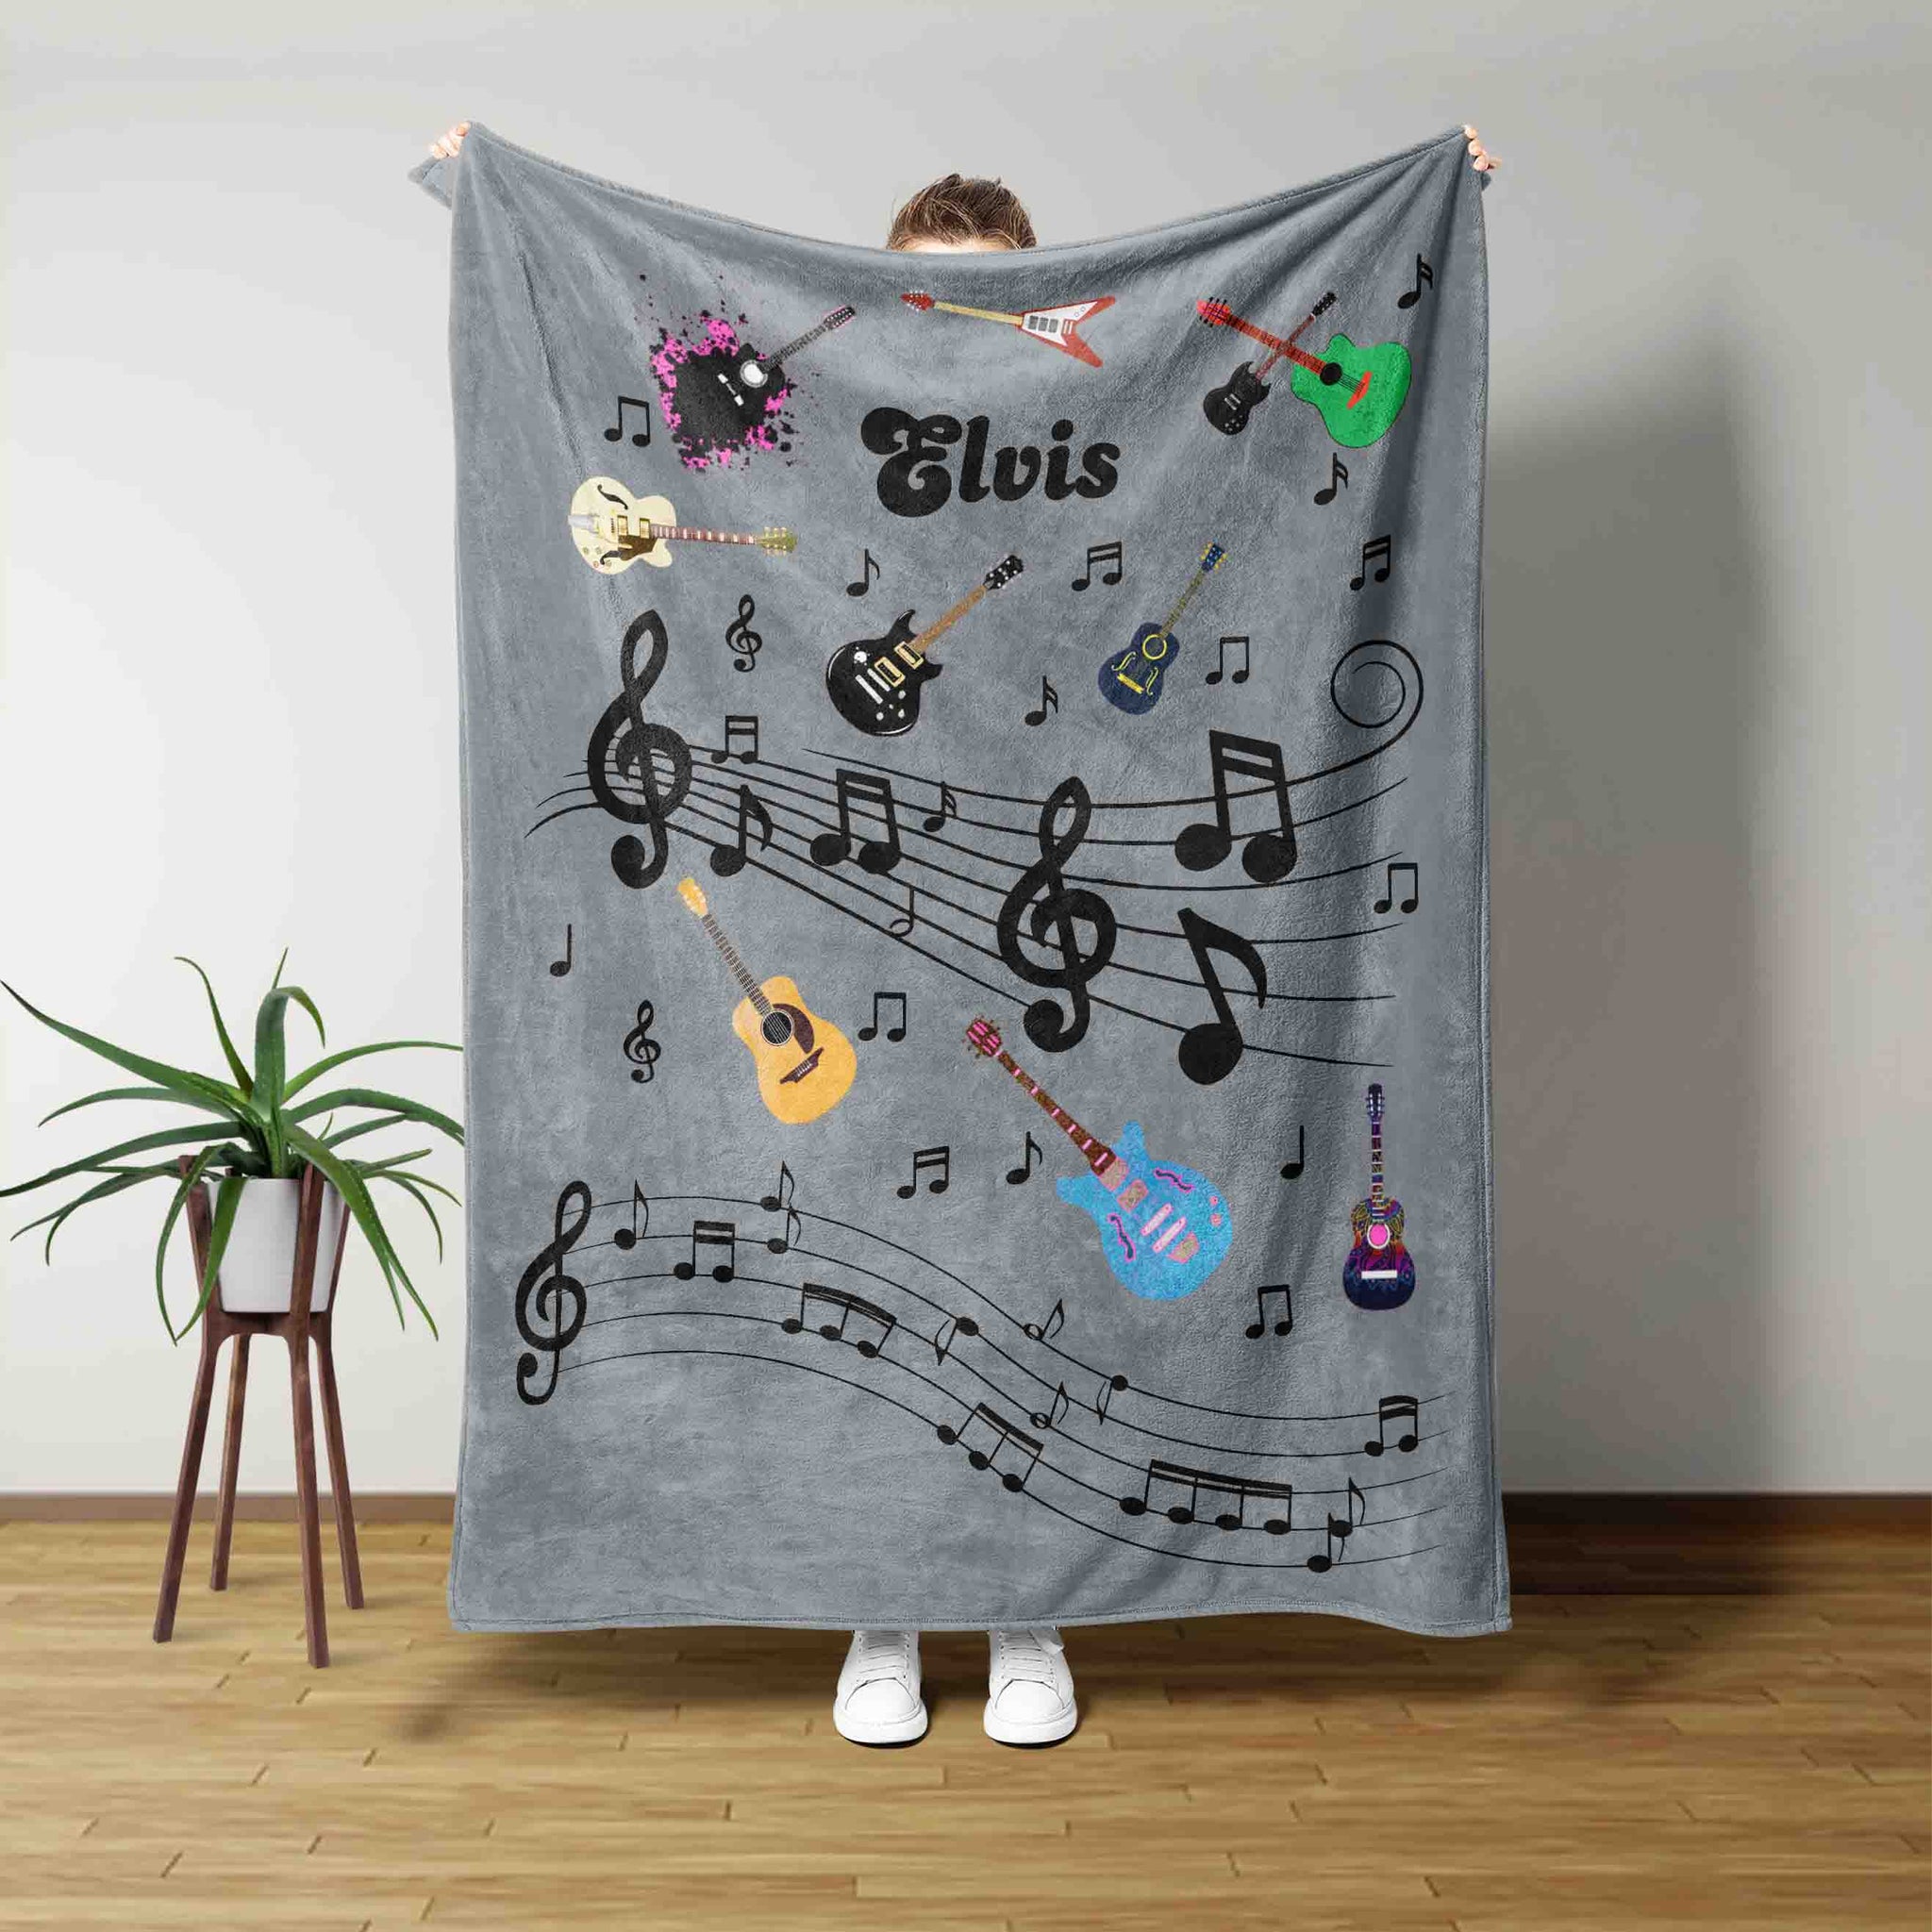 Personalized Name Blanket, Music note Blanket, Sheet Music On Blanket, Musical Instrument Blanket, Best Gift Blanket